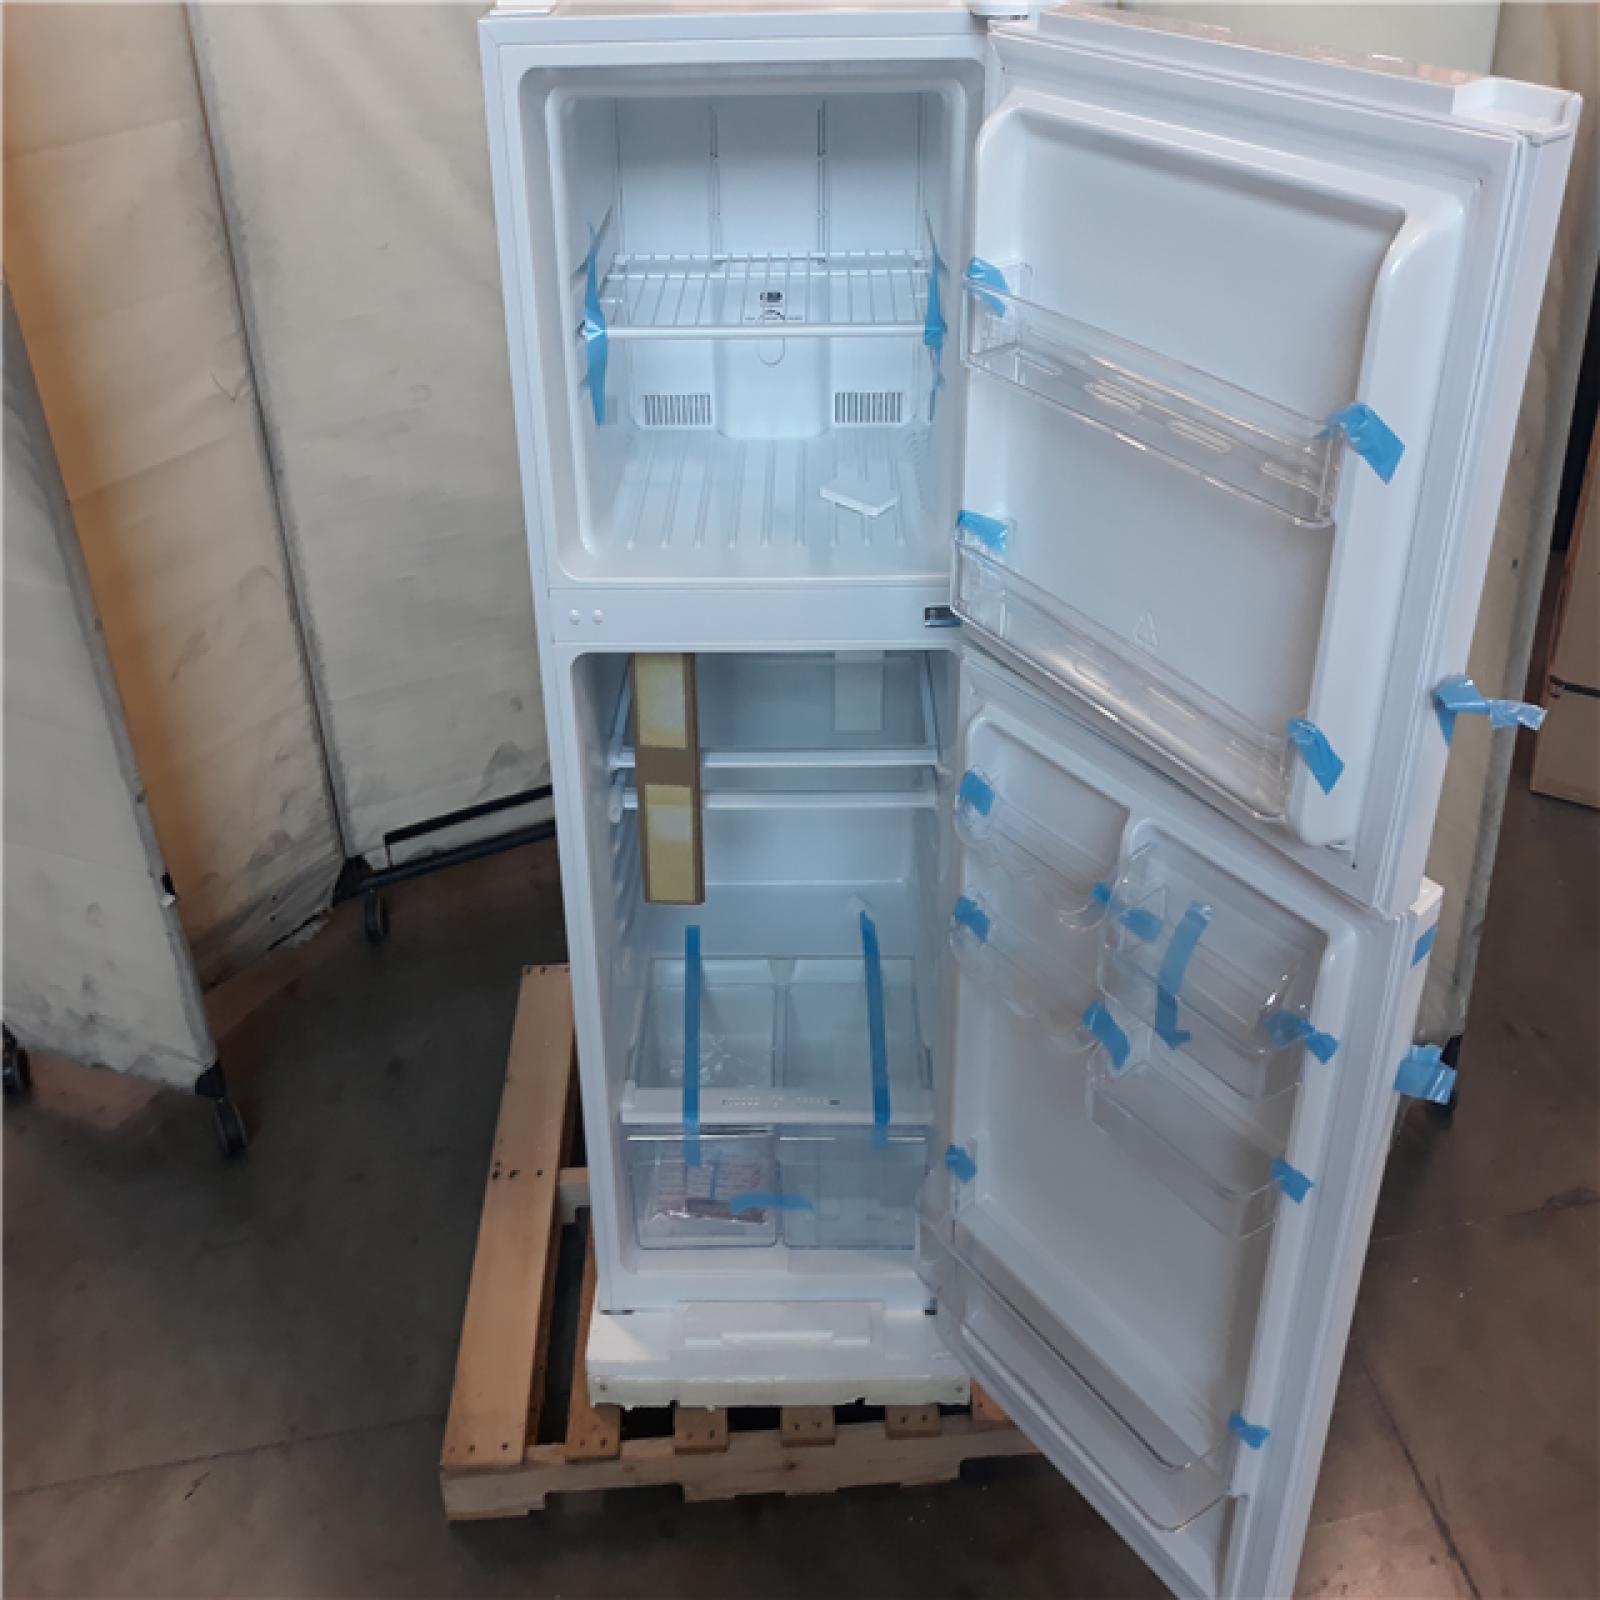 California AS-IS New Magic Chef Top Freezer Refrigerator